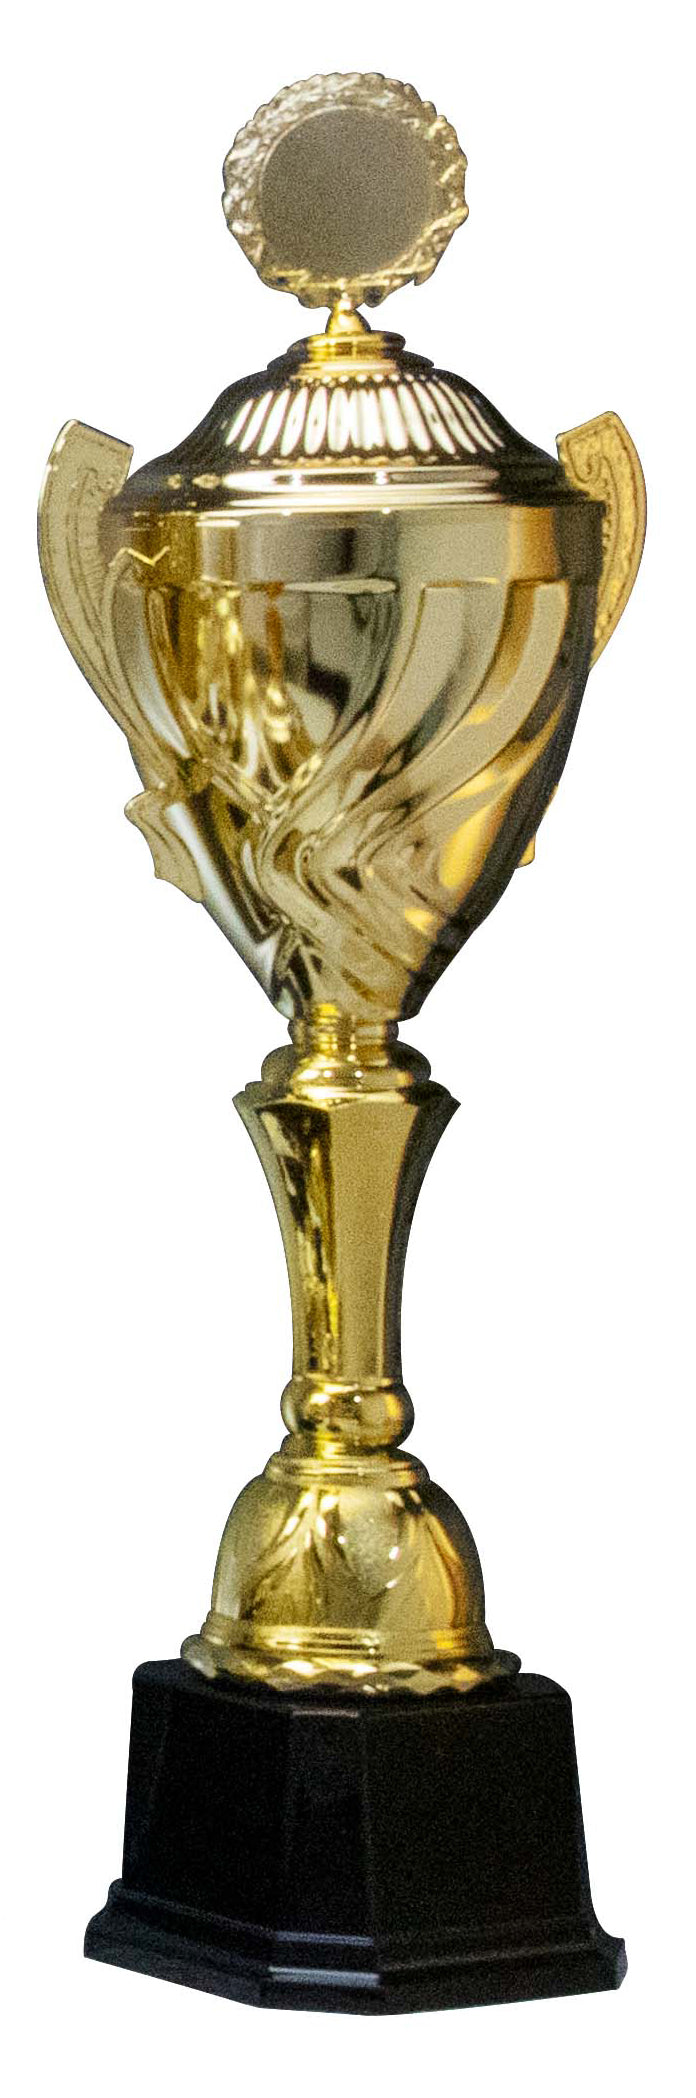 Pokale Amberg 8- er Pokalserie mit Deckel 360 mm - 554 mm PK756710-8-E50